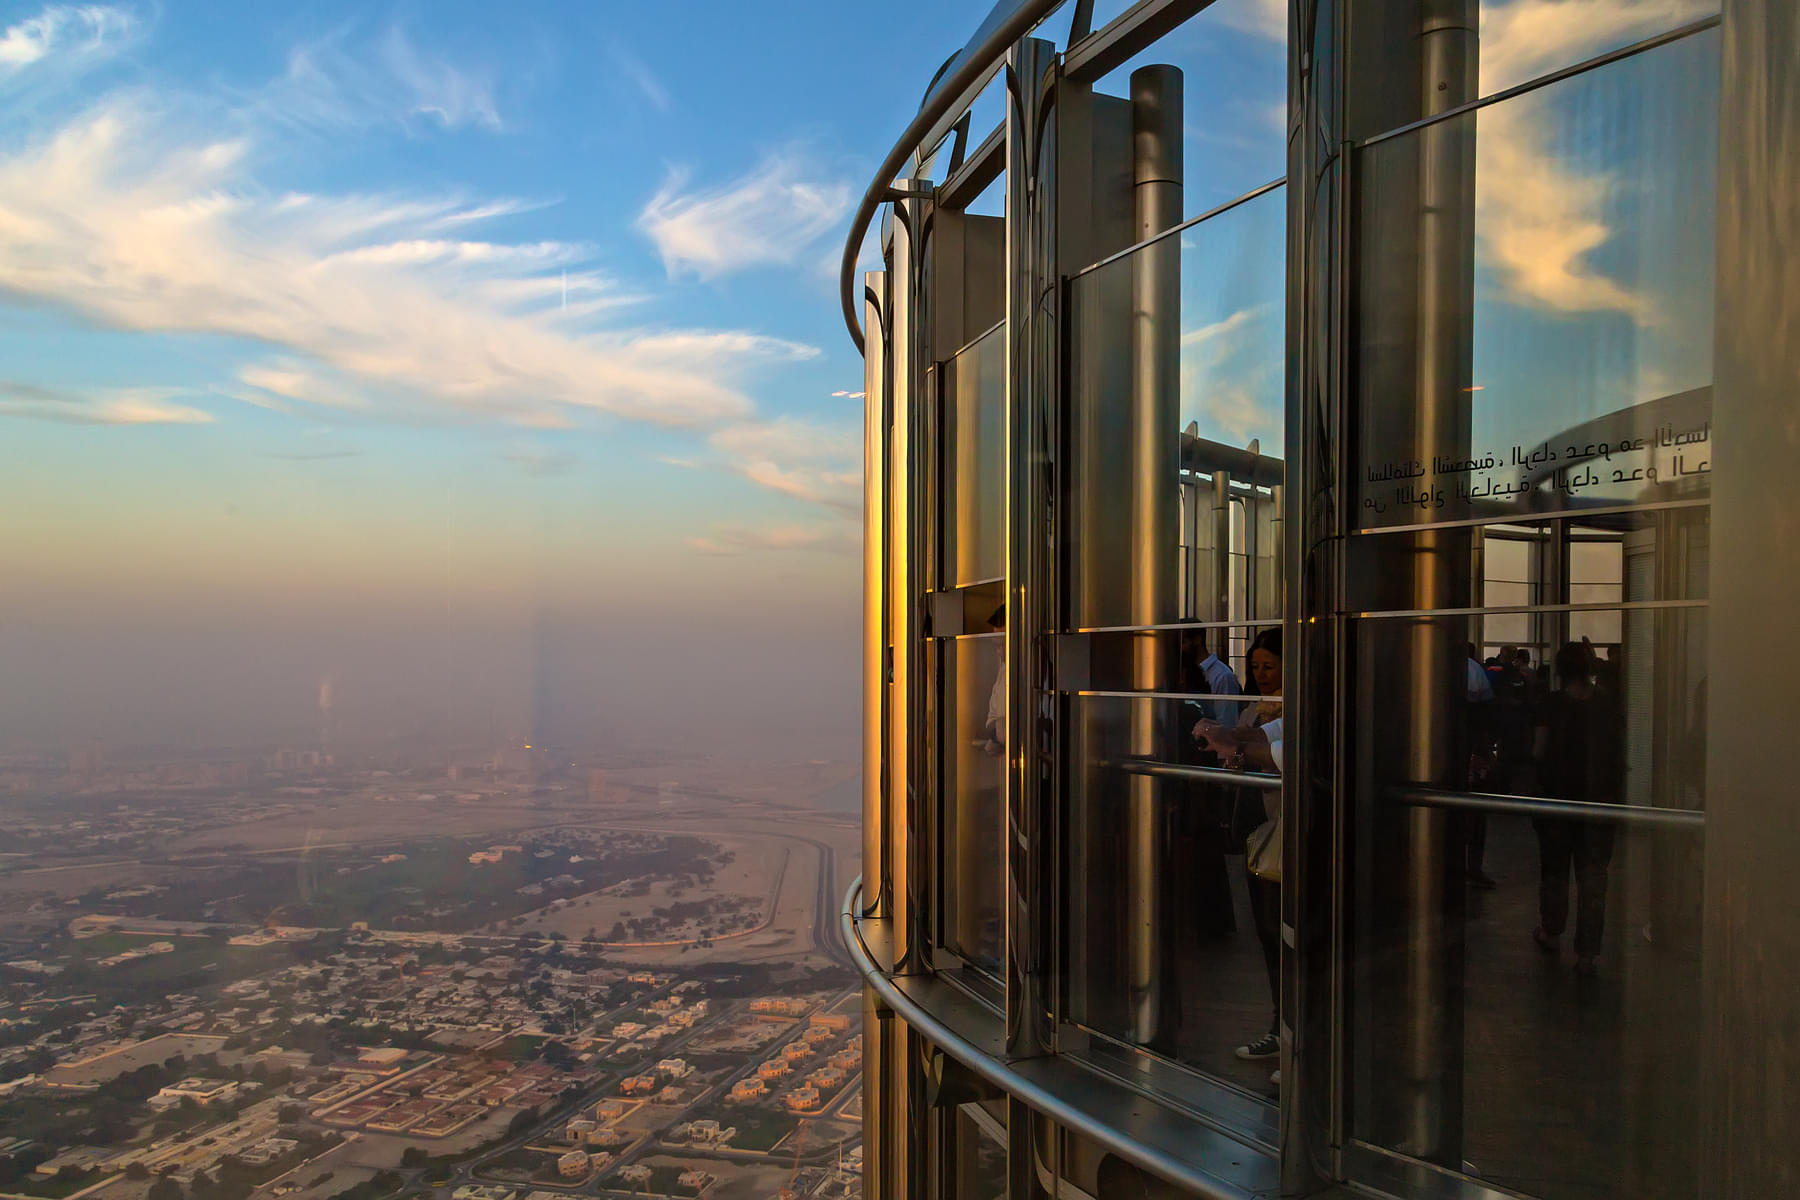 See what Dubai city looks like from floor to ceiling windows of 124th floor of Burj Khalifa